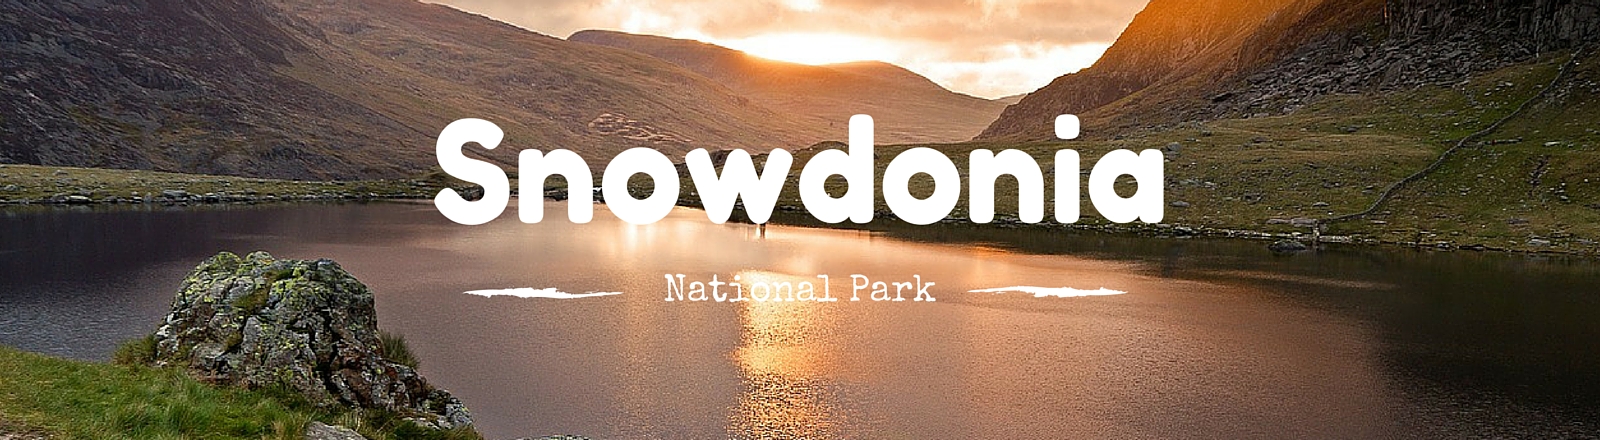 Snowdonia National Park, National Parks Guy